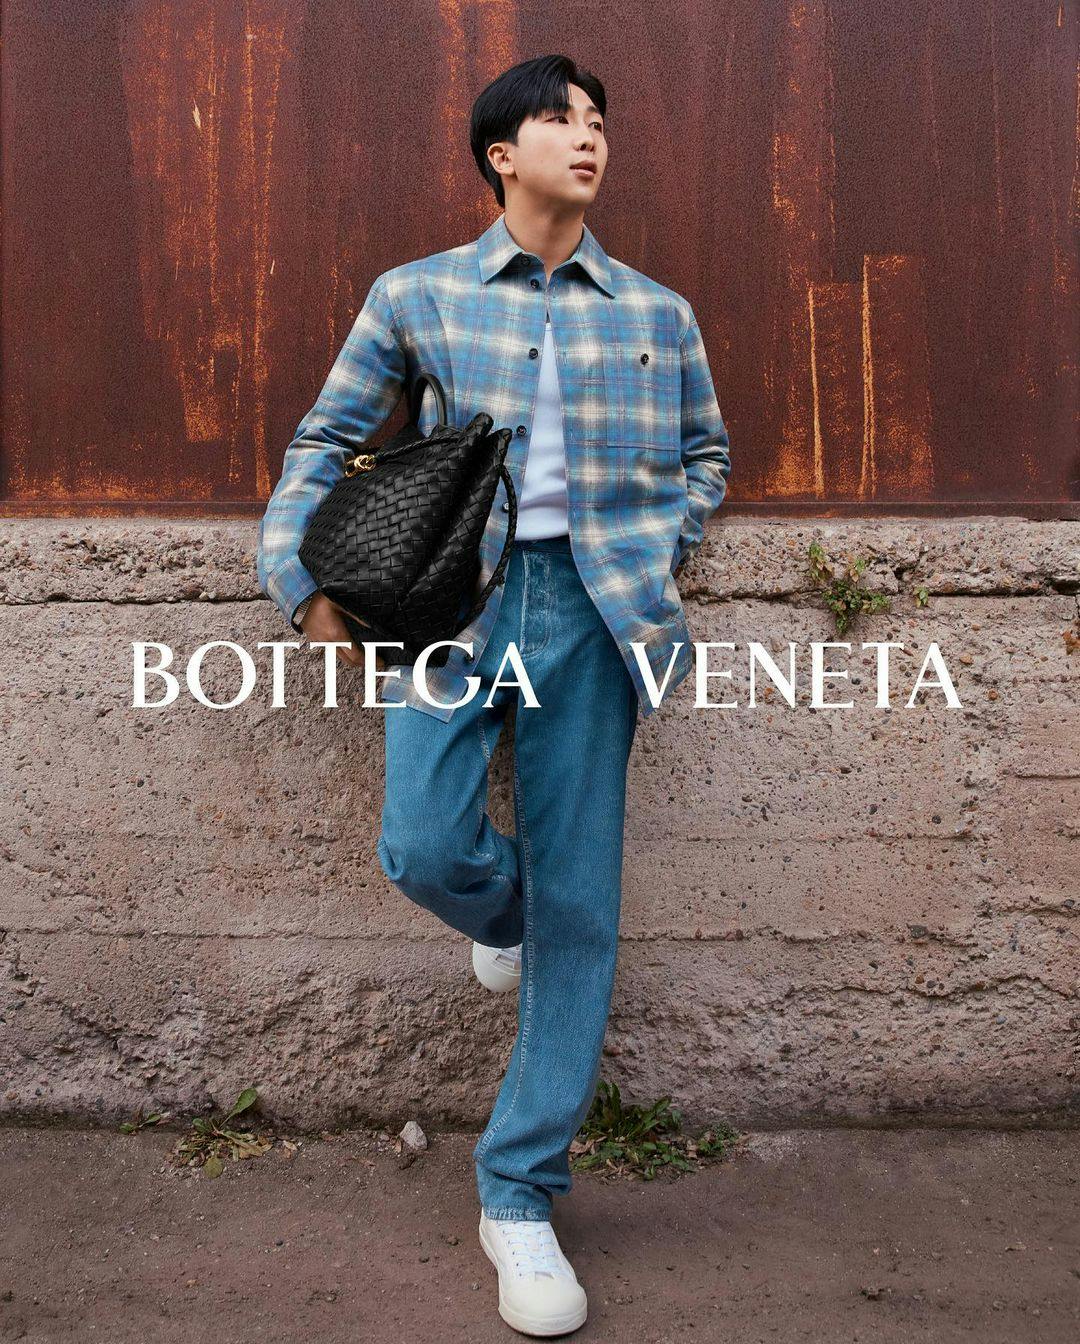 BTS RM New Bottega Veneta Ambassador? Says He'd 'Love To' Work